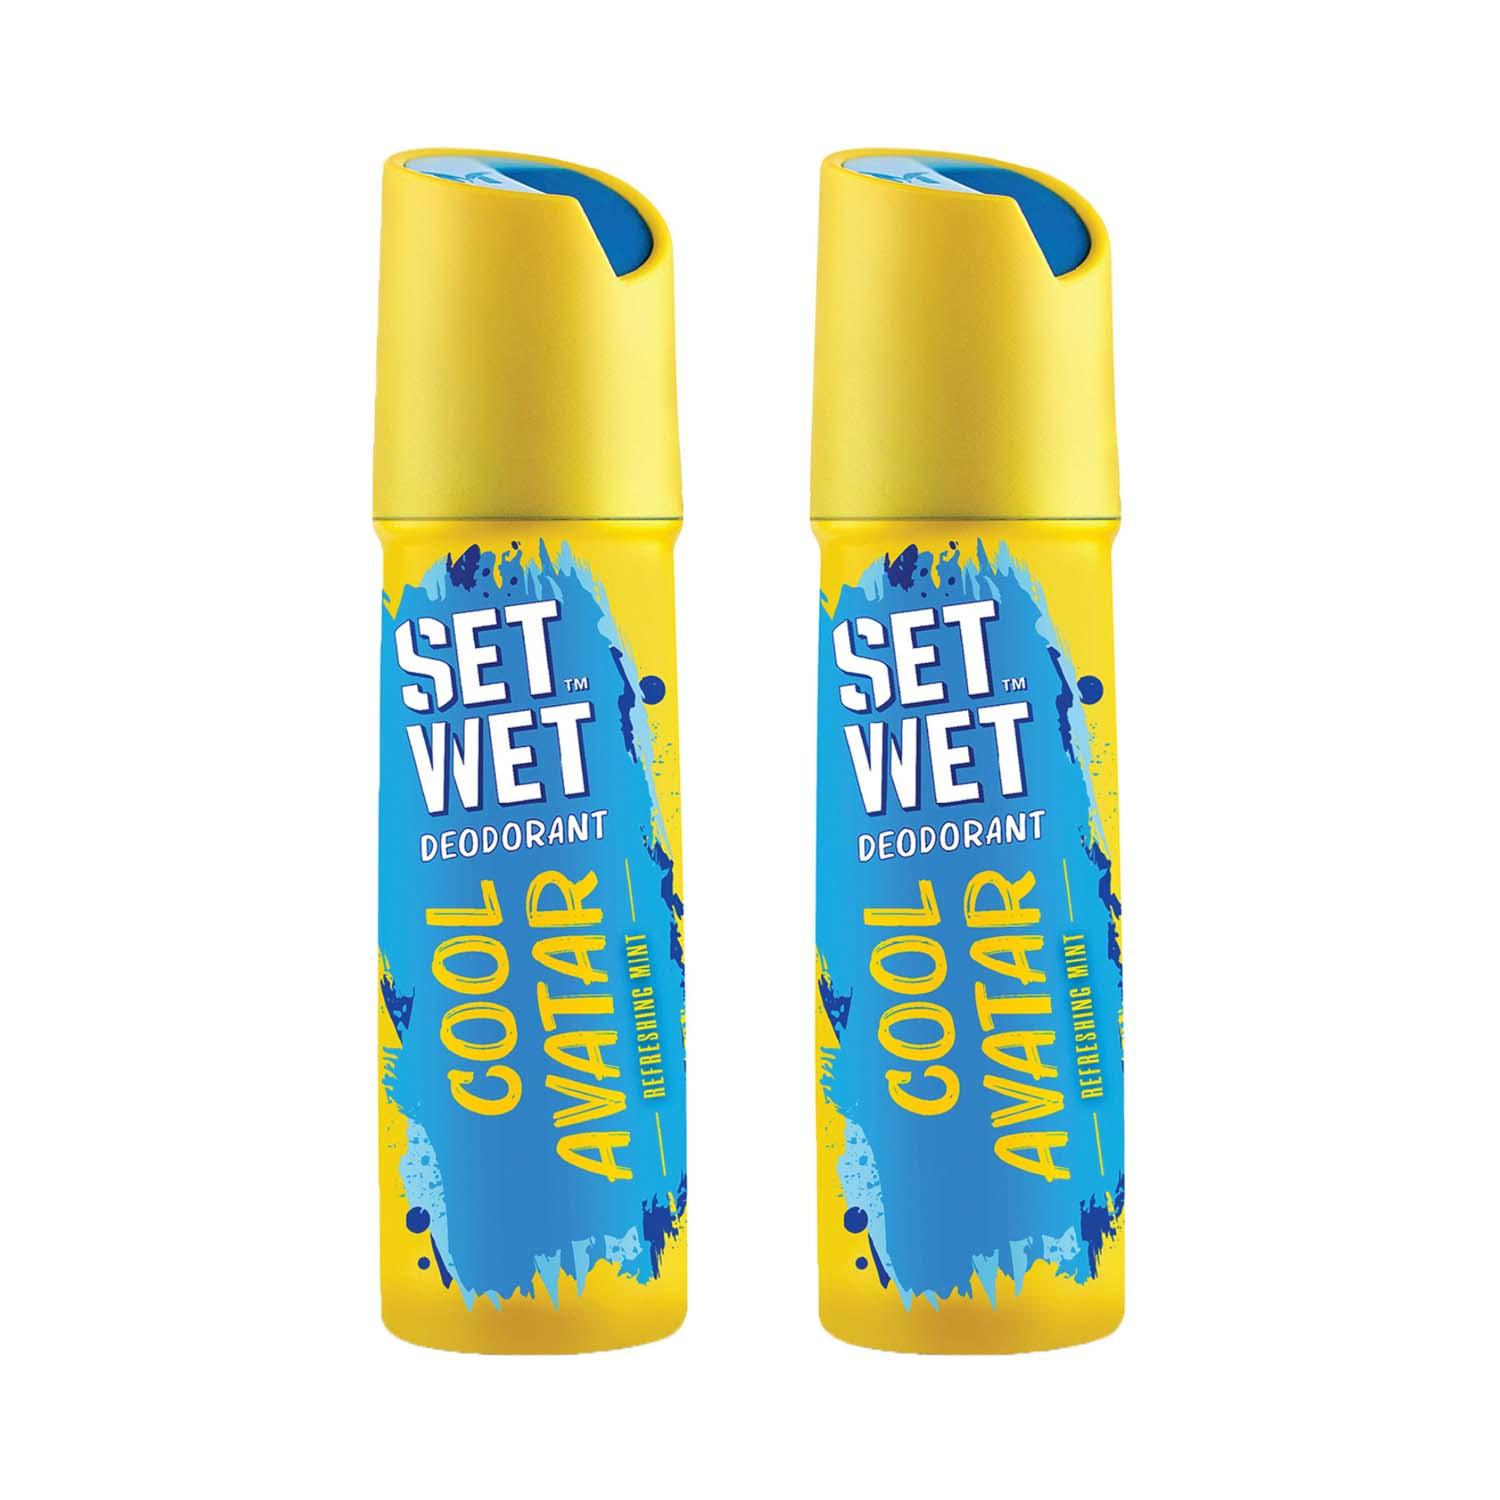 Set Wet | Set Wet Cool Avatar Body Spray Perfume for Men (2 pcs)